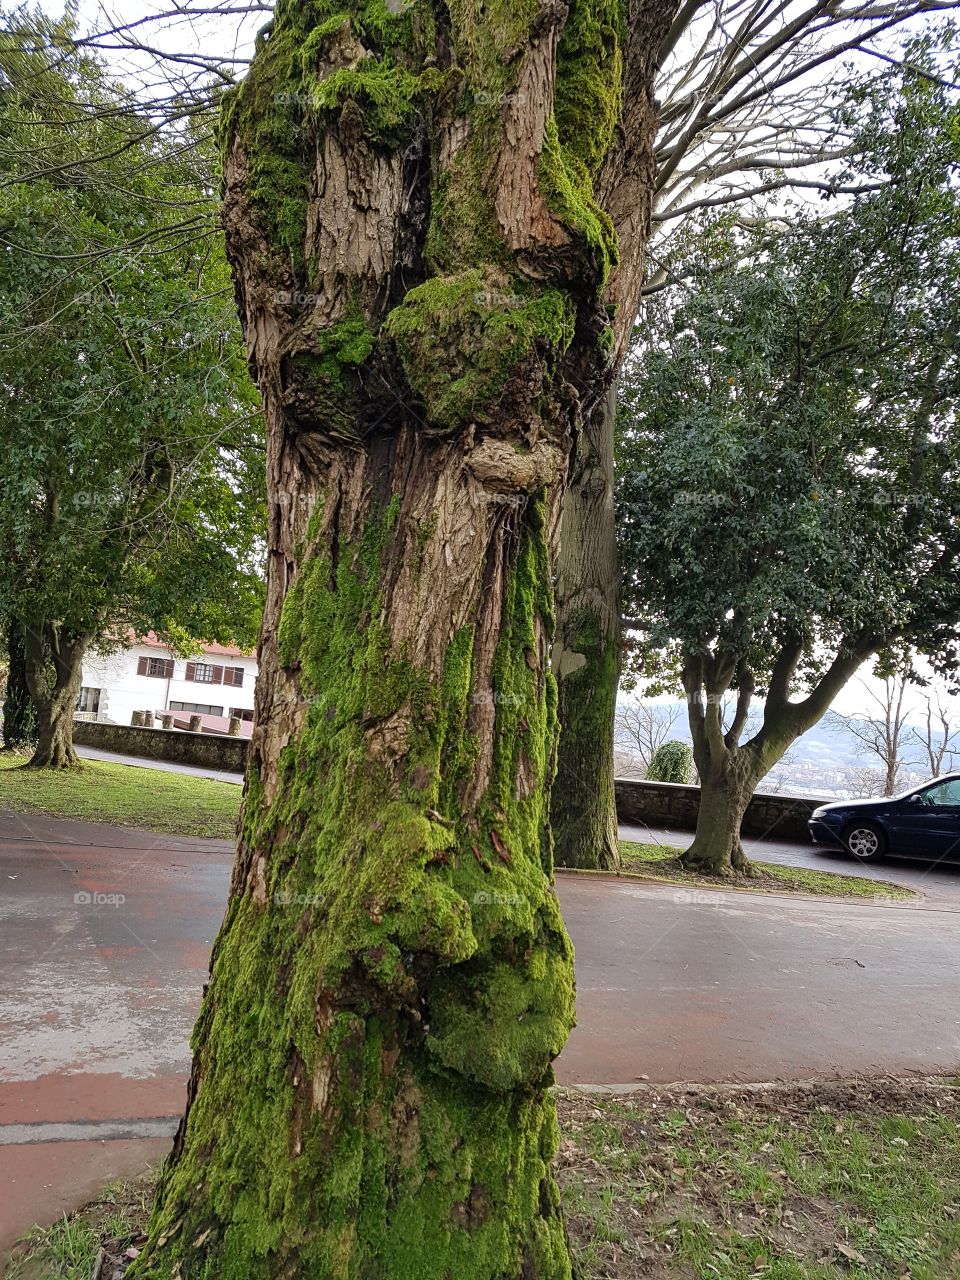 Tree or moss...